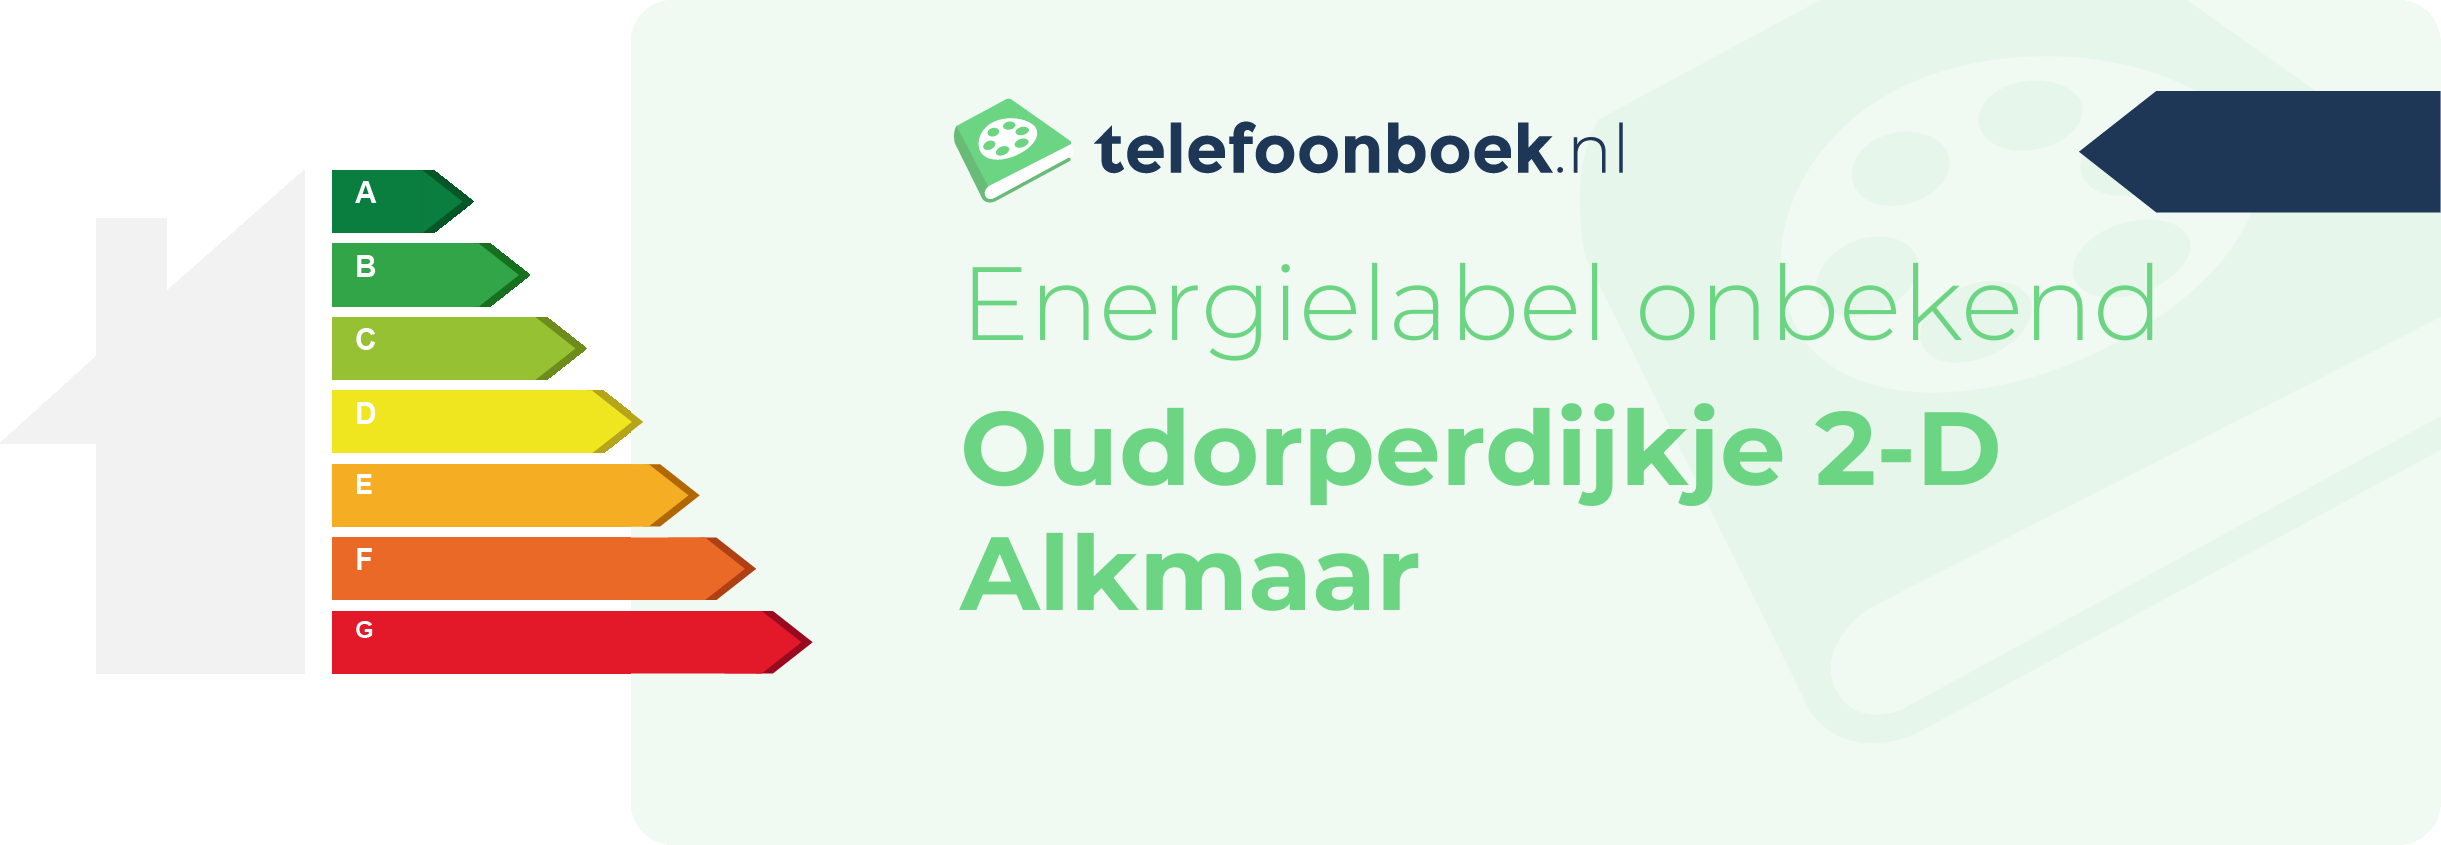 Energielabel Oudorperdijkje 2-D Alkmaar